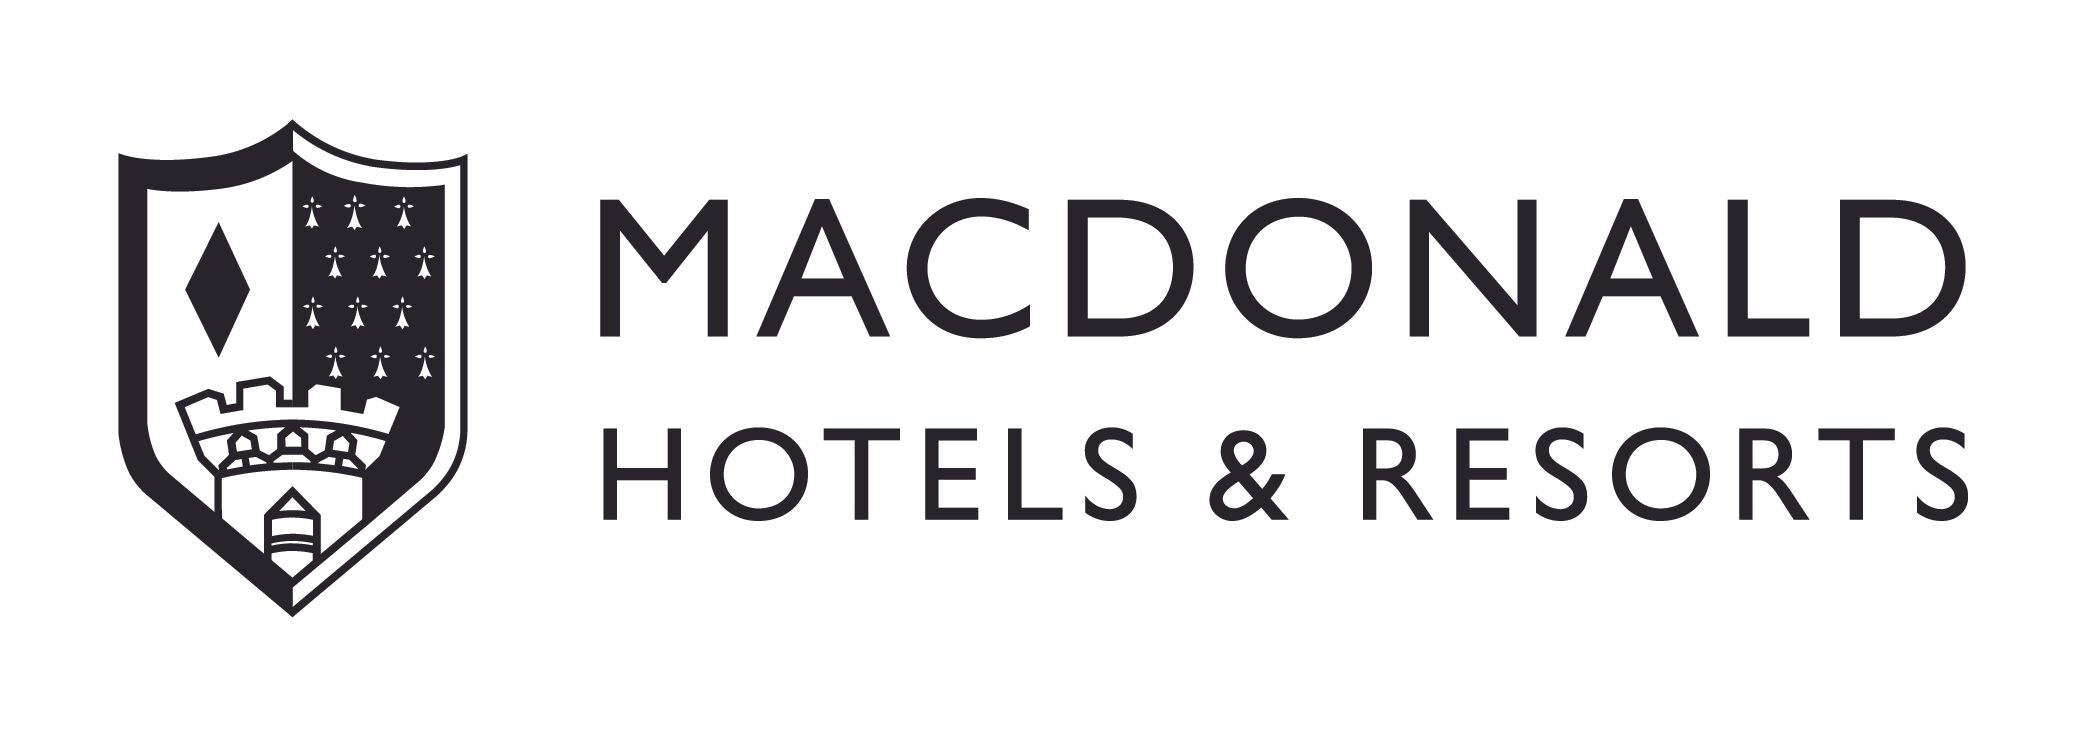 Macdonald Hotels & Resorts  